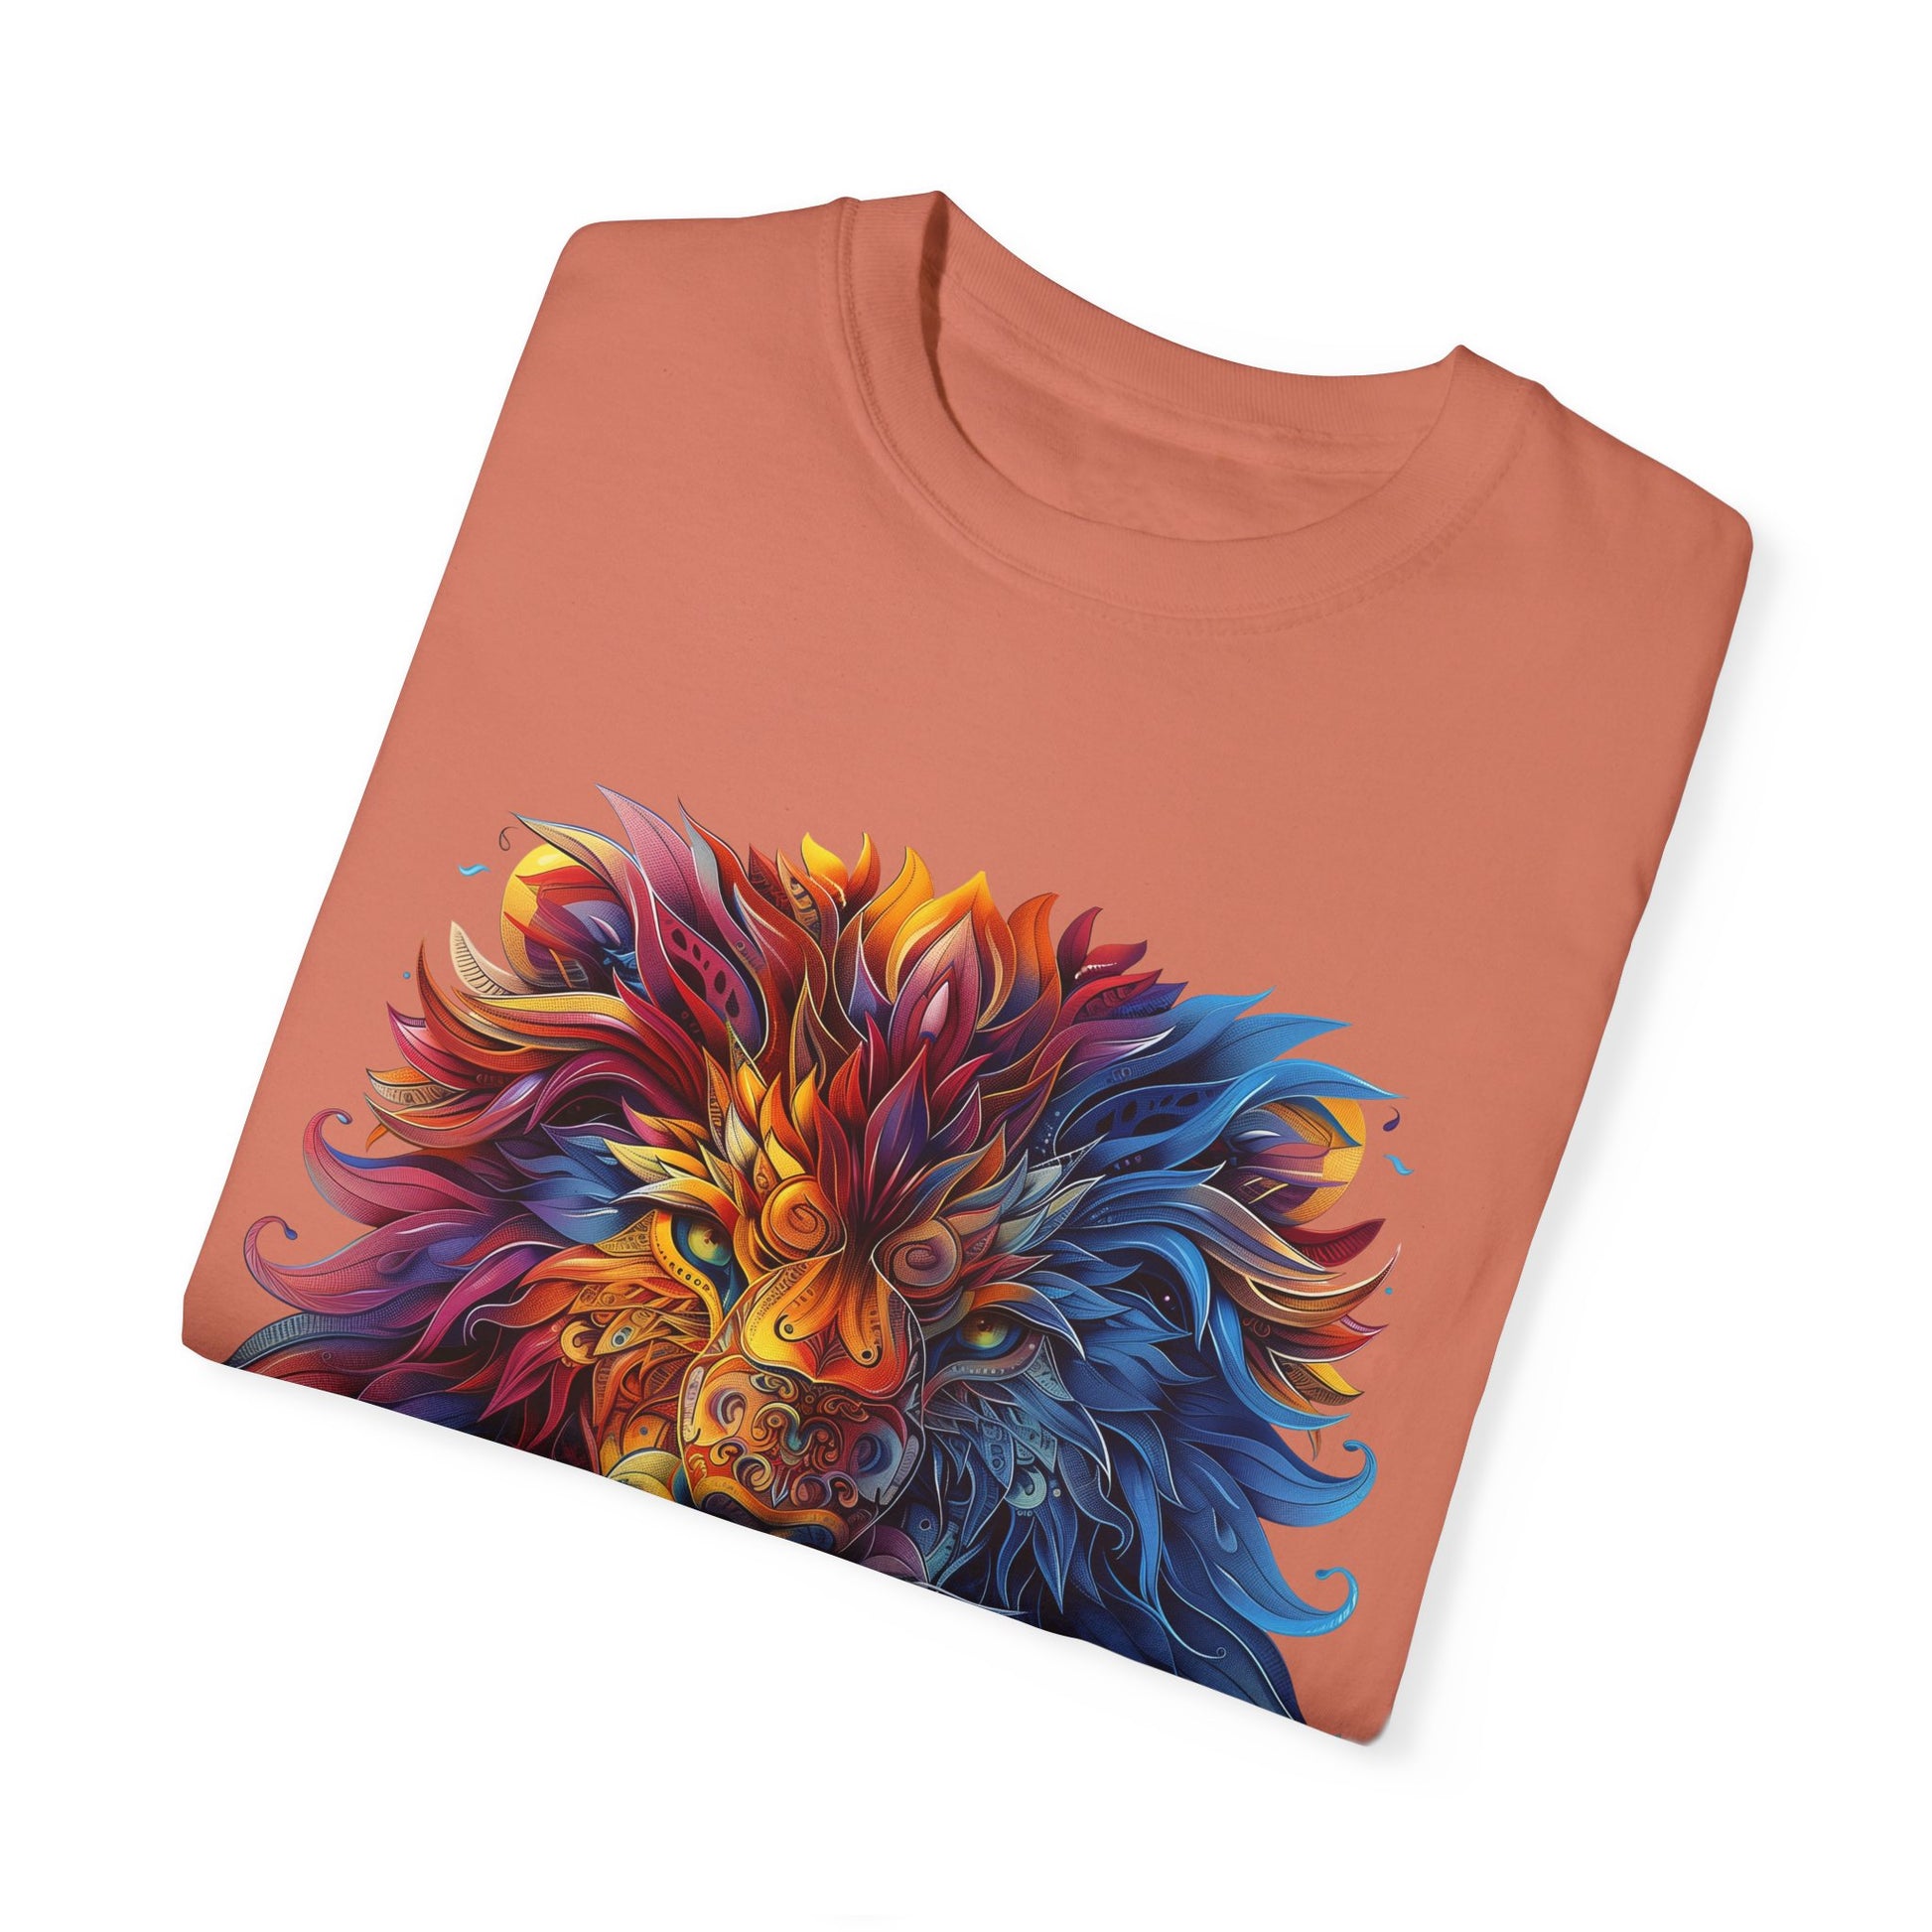 Lion Head Cool Graphic Design Novelty Unisex Garment-dyed T-shirt Cotton Funny Humorous Graphic Soft Premium Unisex Men Women Terracotta T-shirt Birthday Gift-56